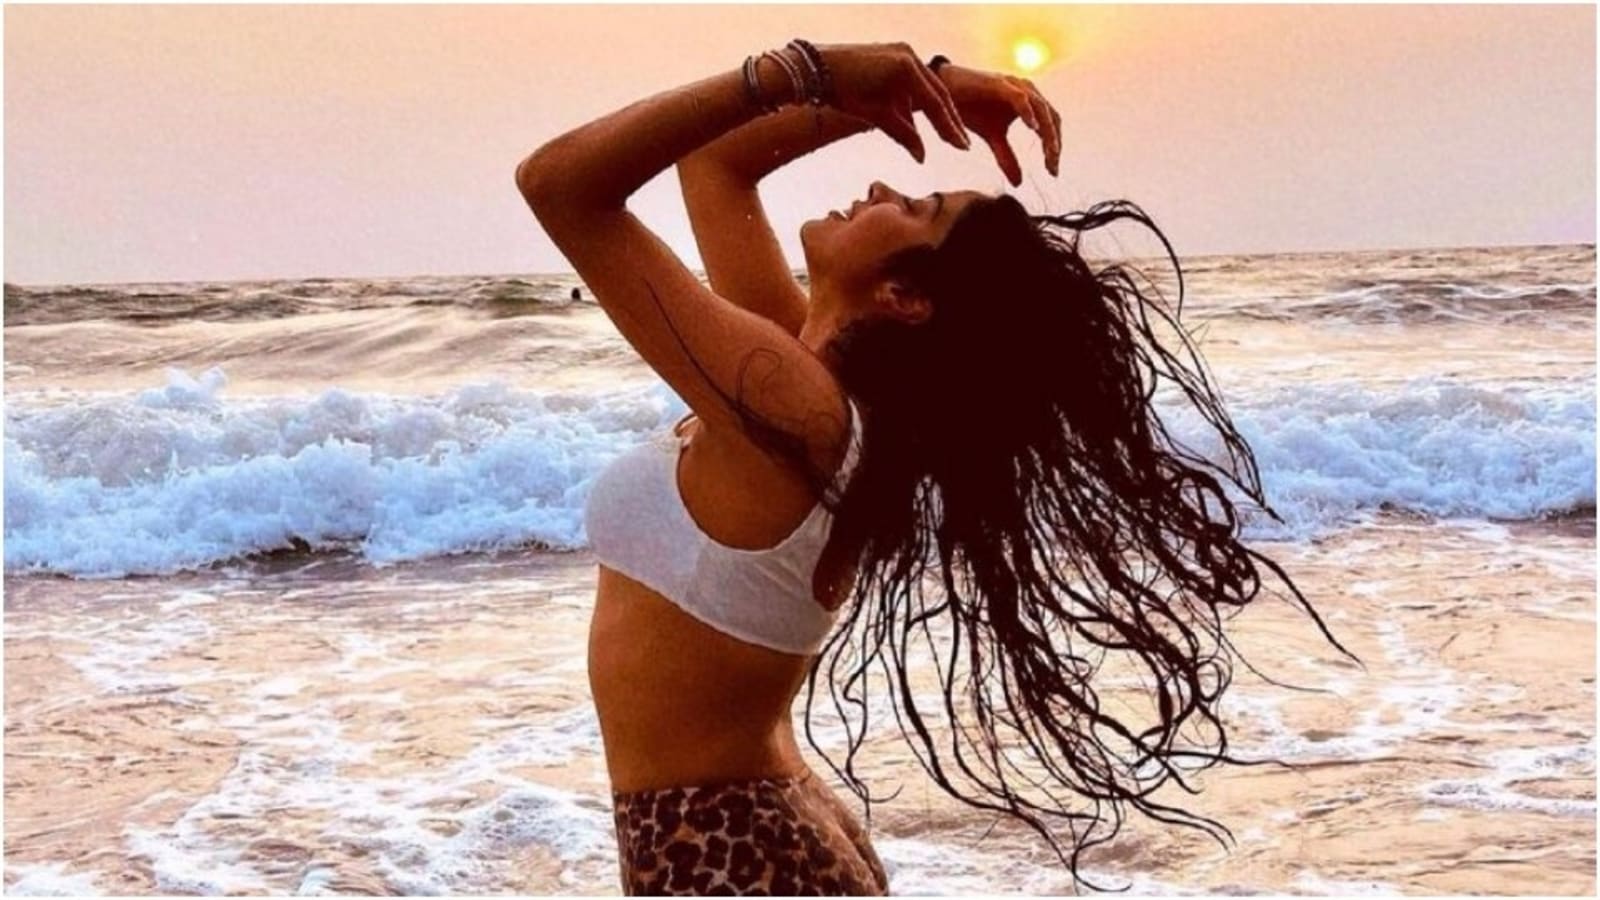 Janhvi Kapoor jazzes up beach look in ₹3k bikini top and leopard